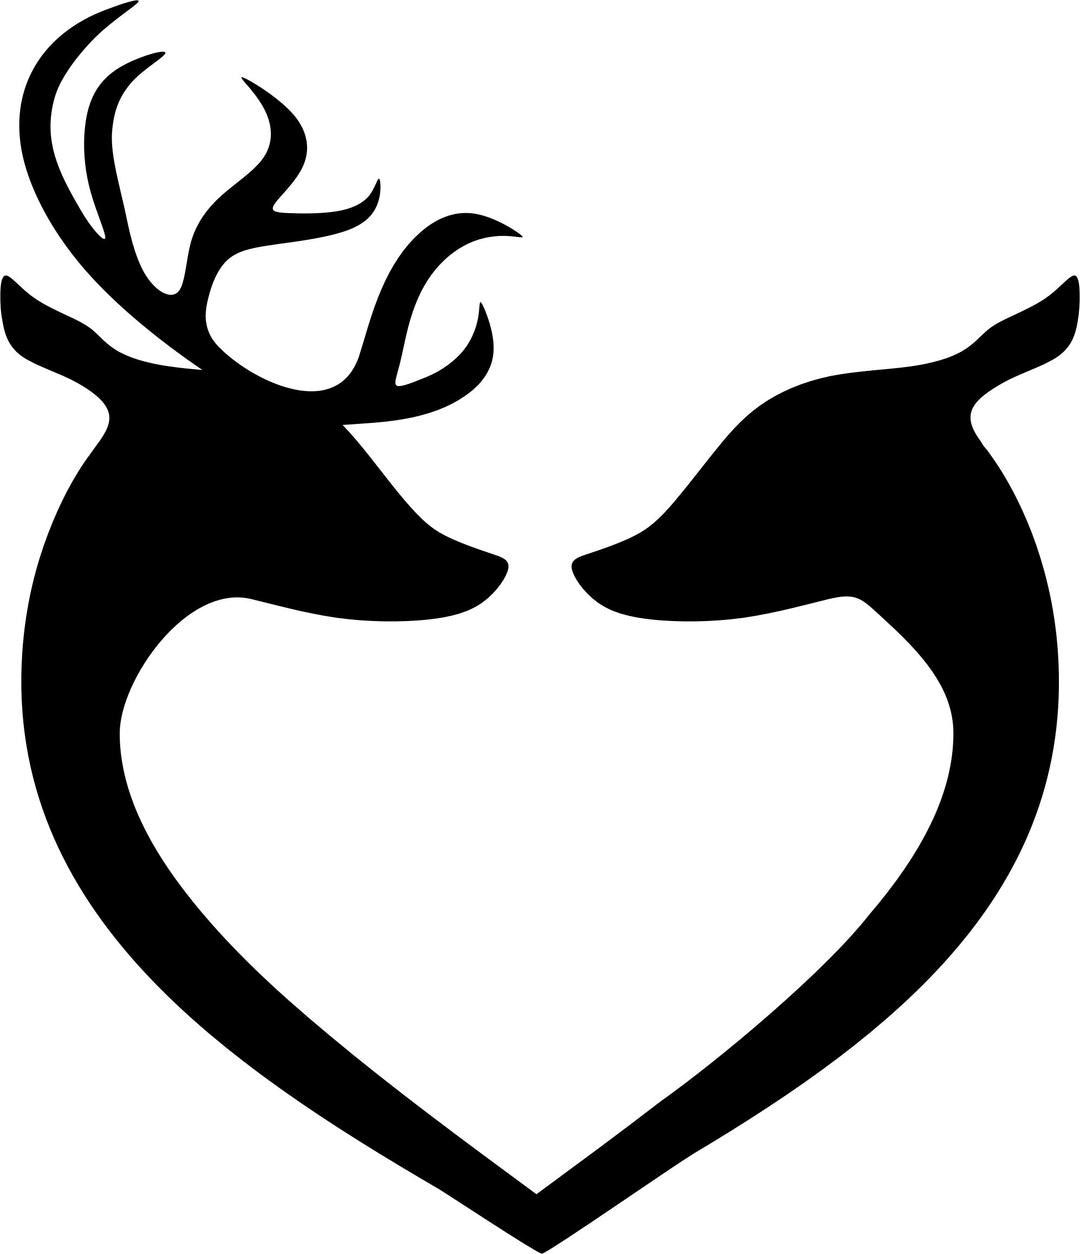 Deer Couple Heart Silhouette Black png transparent